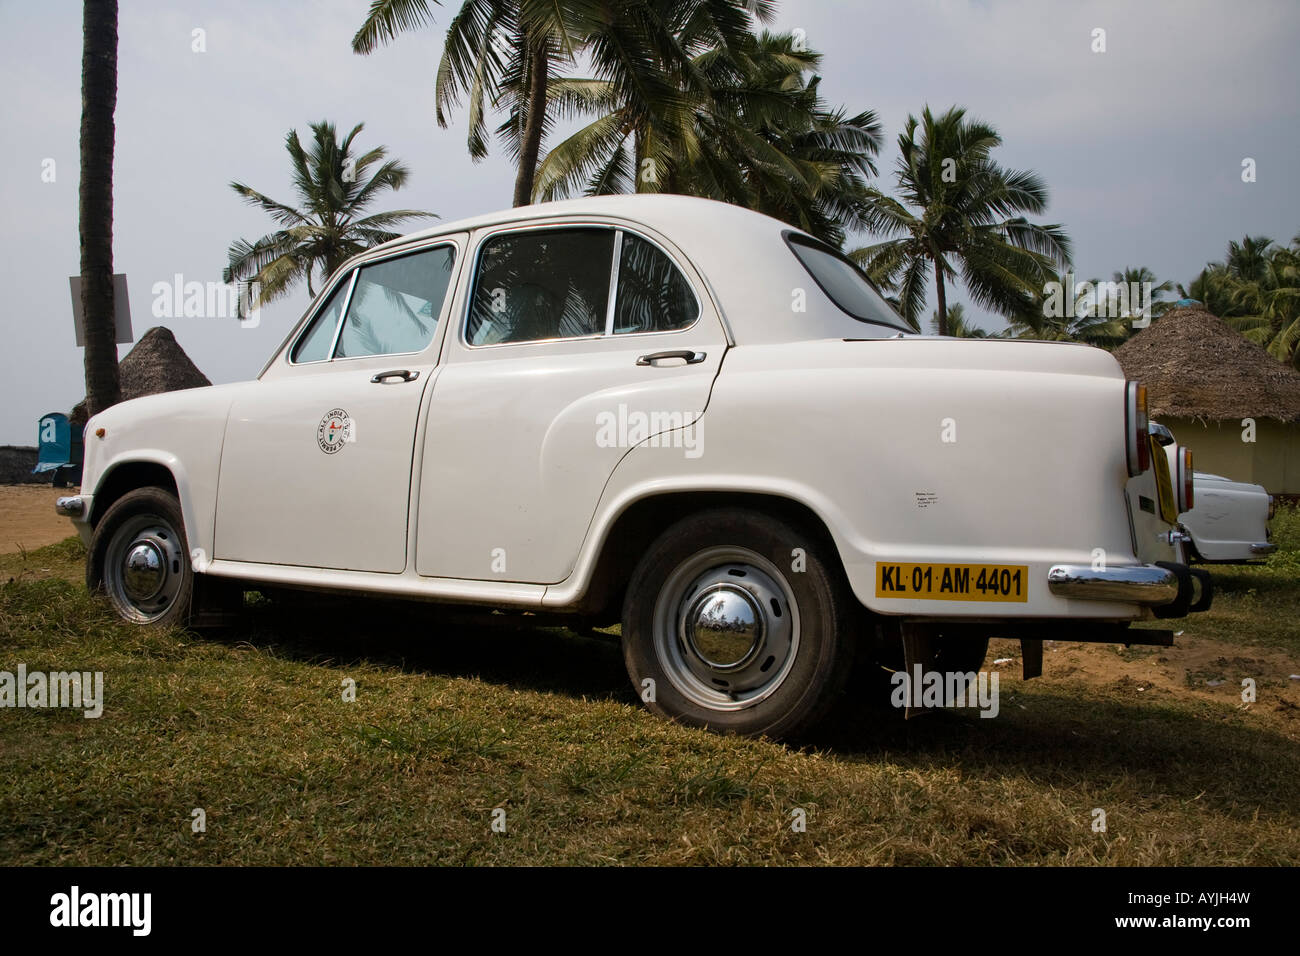 White Ambassador car, Kovalam, Kerala, India Stock Photo - Alamy